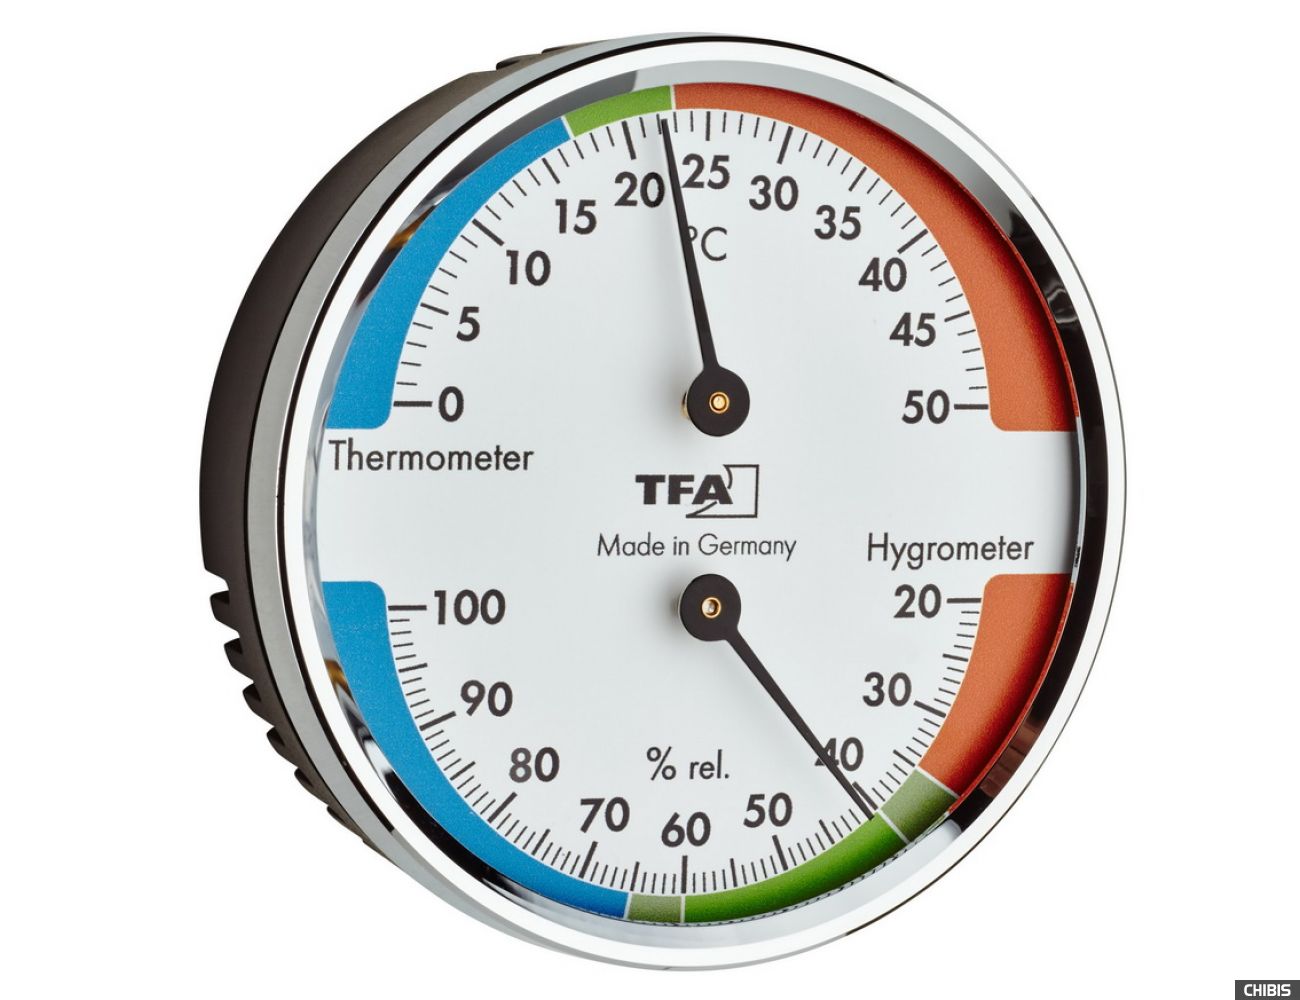 Термогигрометр TFA 45204042, цветная шкала